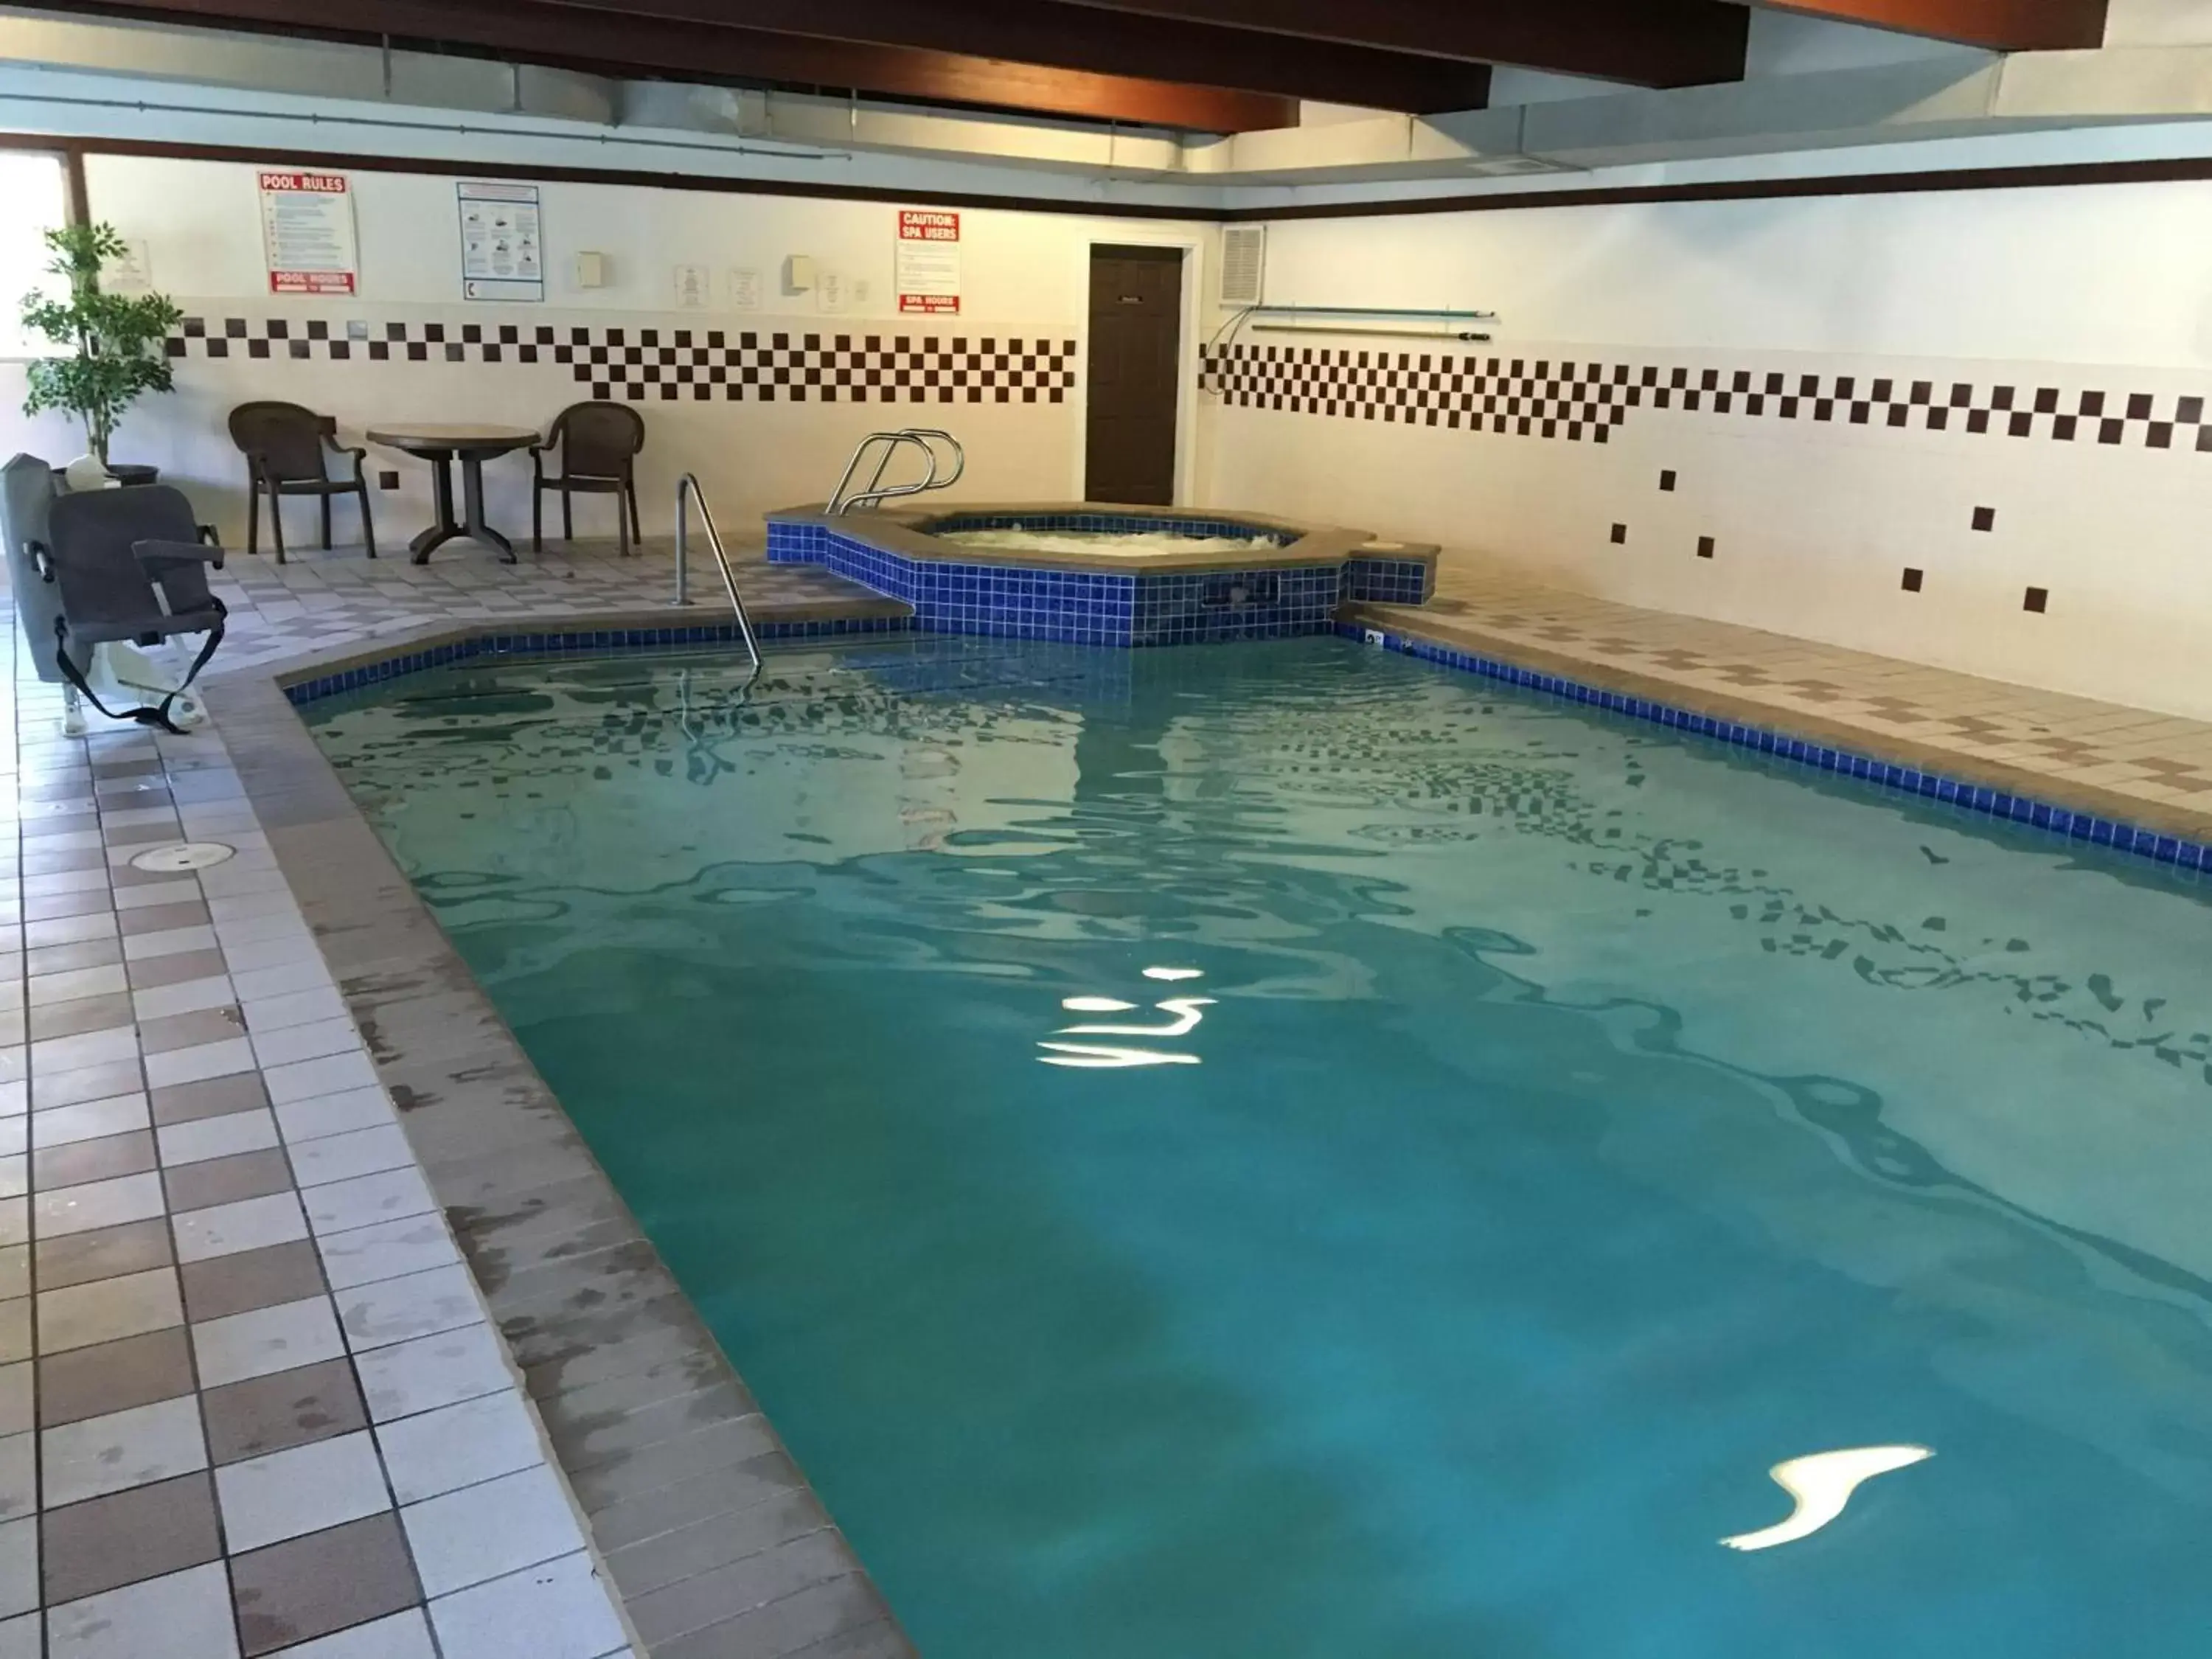 On site, Swimming Pool in Best Western John Day Inn